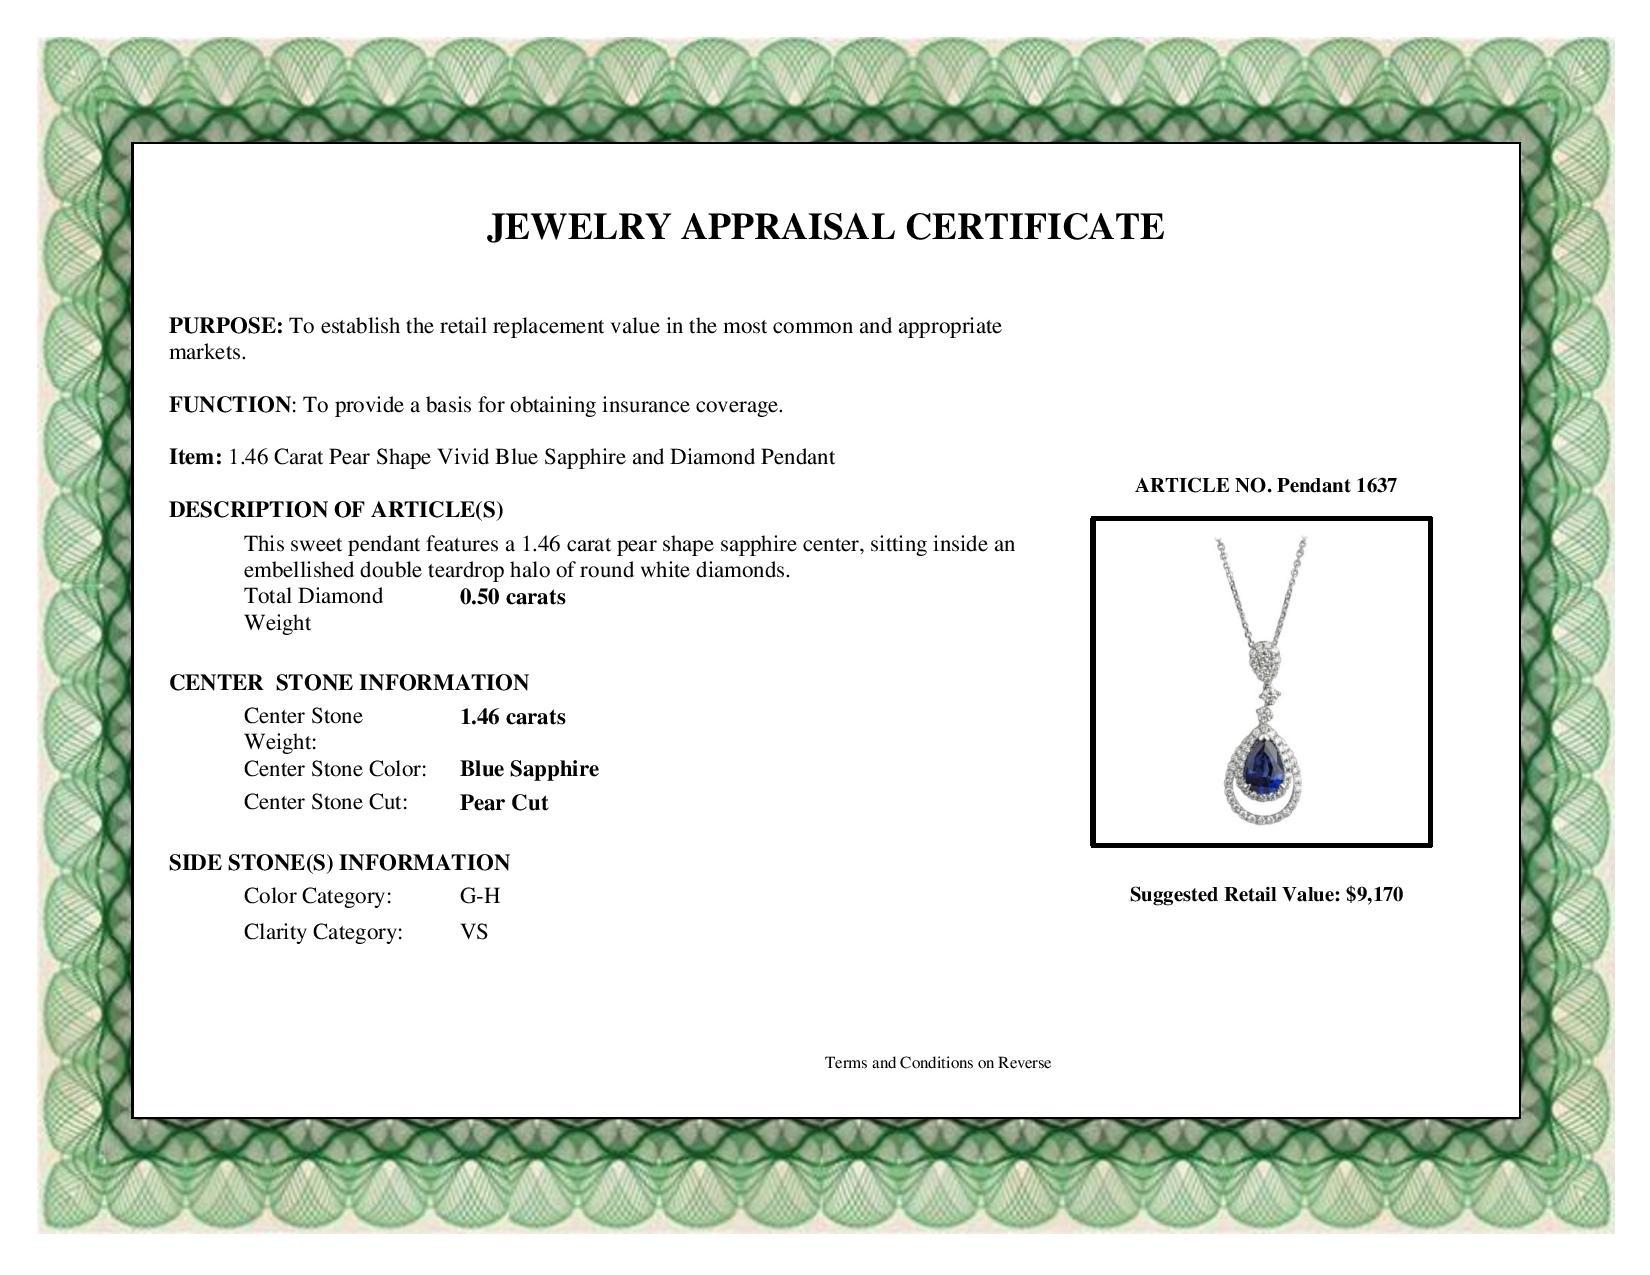 1.46 Carat Pear Shape Vivid Blue Sapphire and Diamond Pendant 1